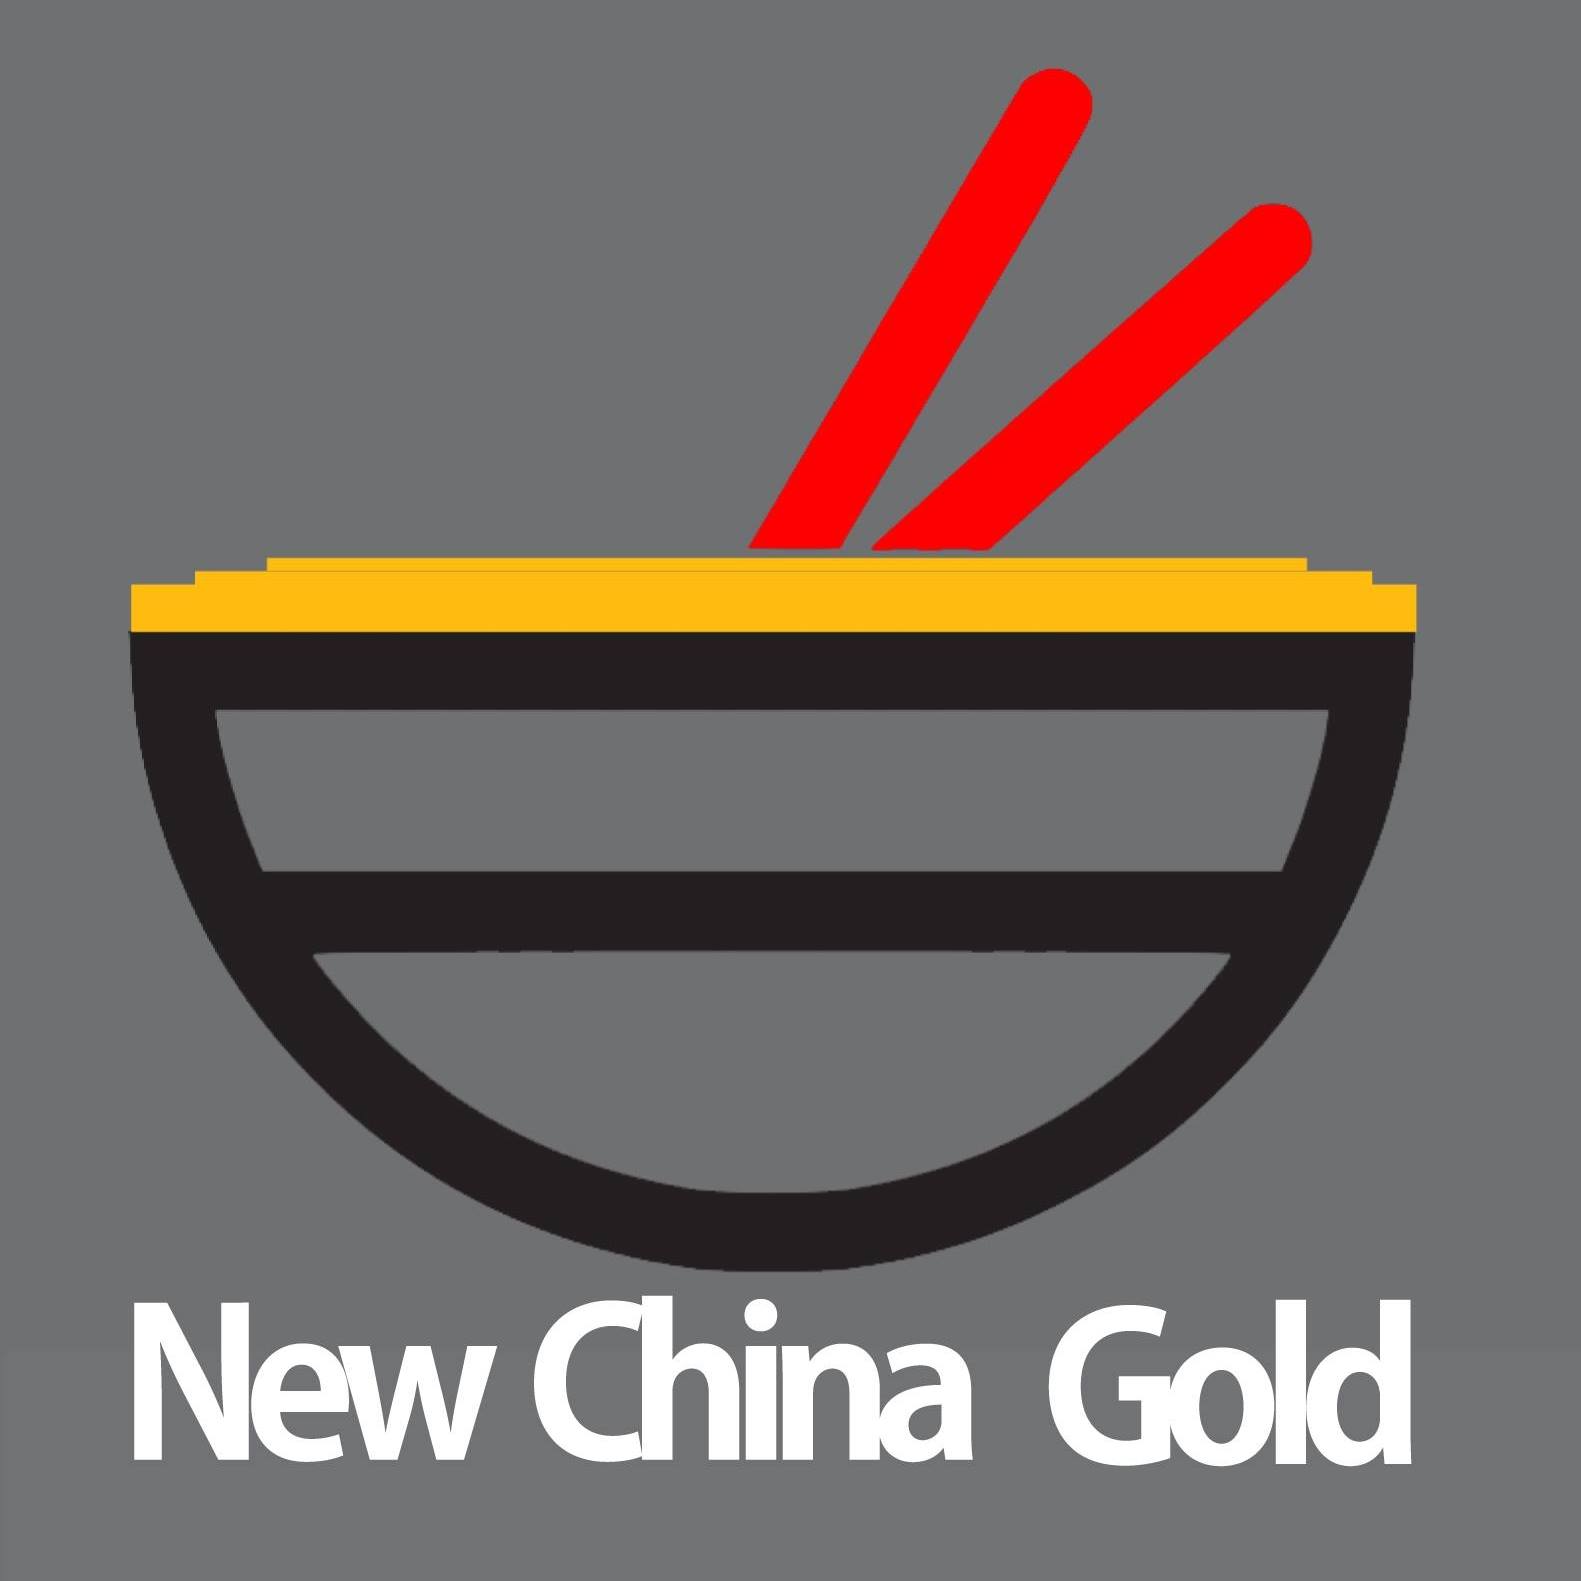 New China Gold